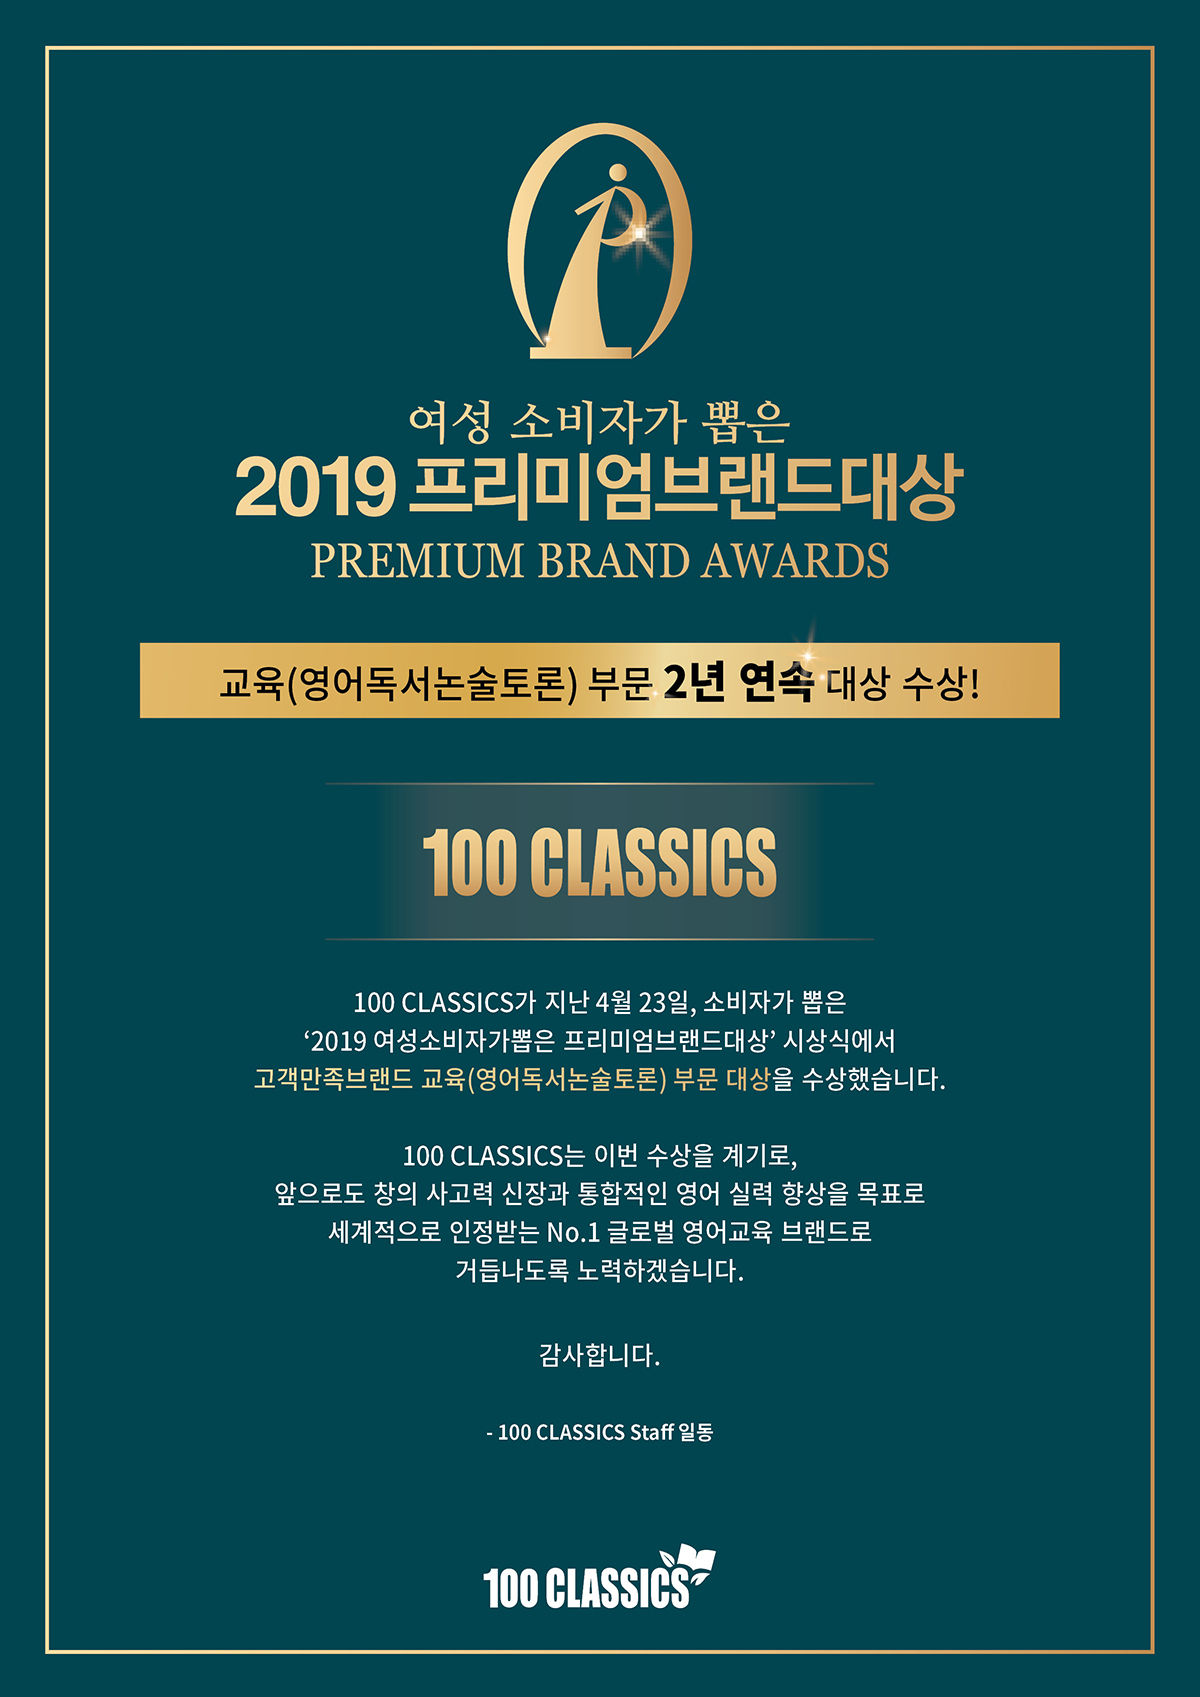 100 Classics 프리미엄브랜드대상_2019.jpg